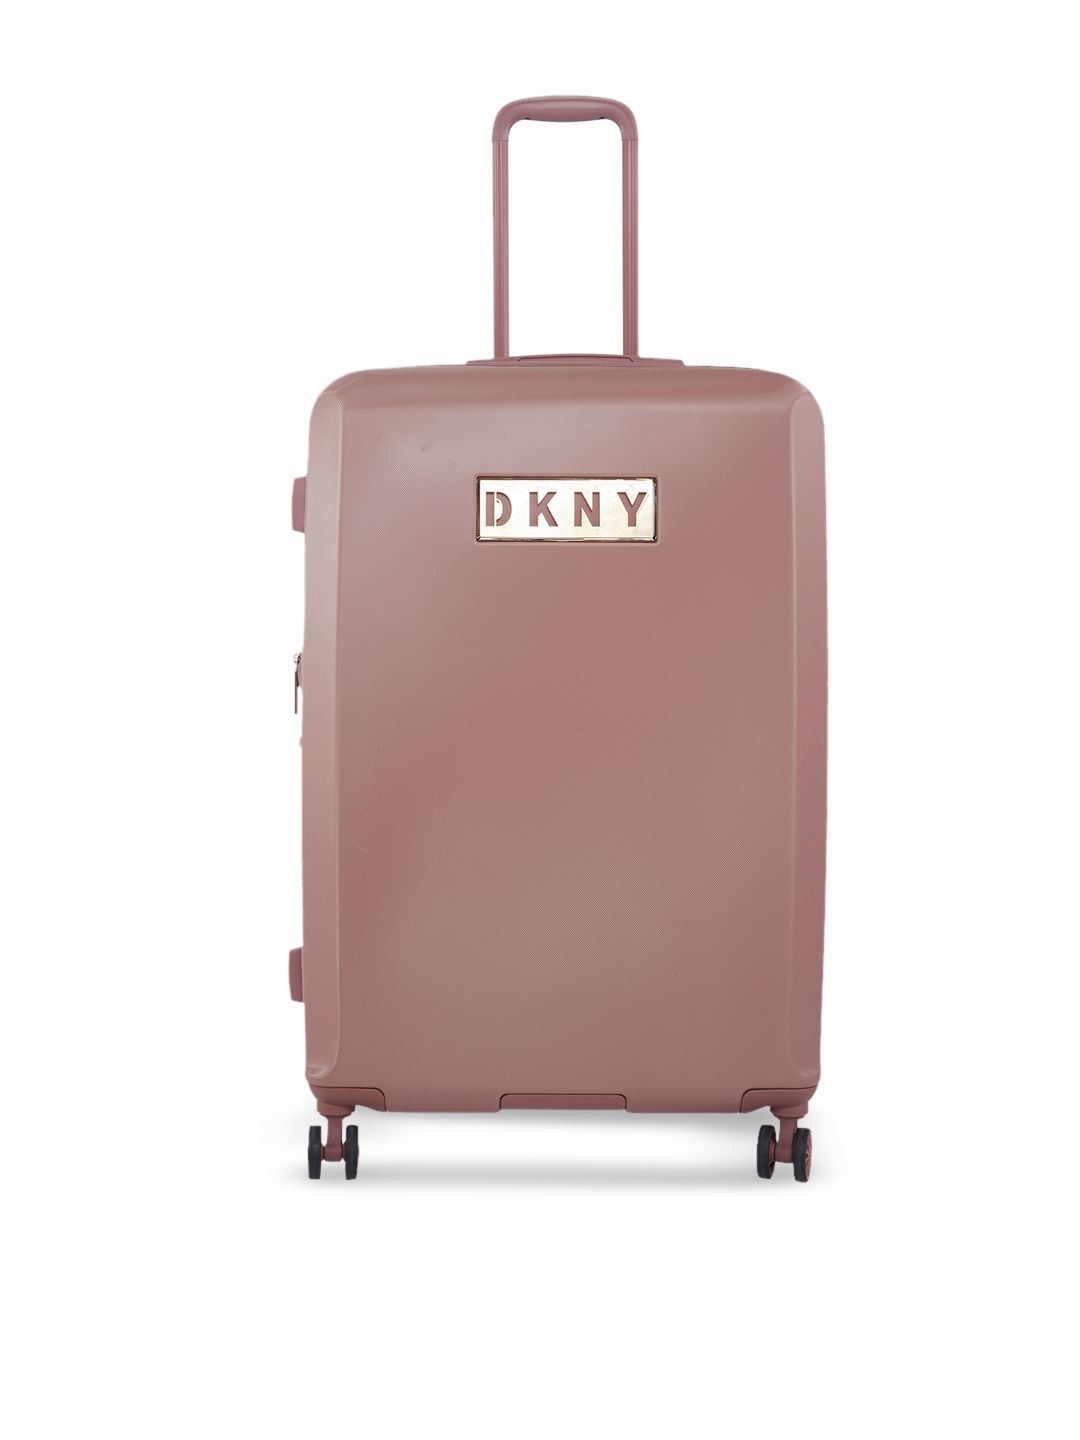 DKNY Alchemy Range Prim Rose Hard Large Suitcase Price in India